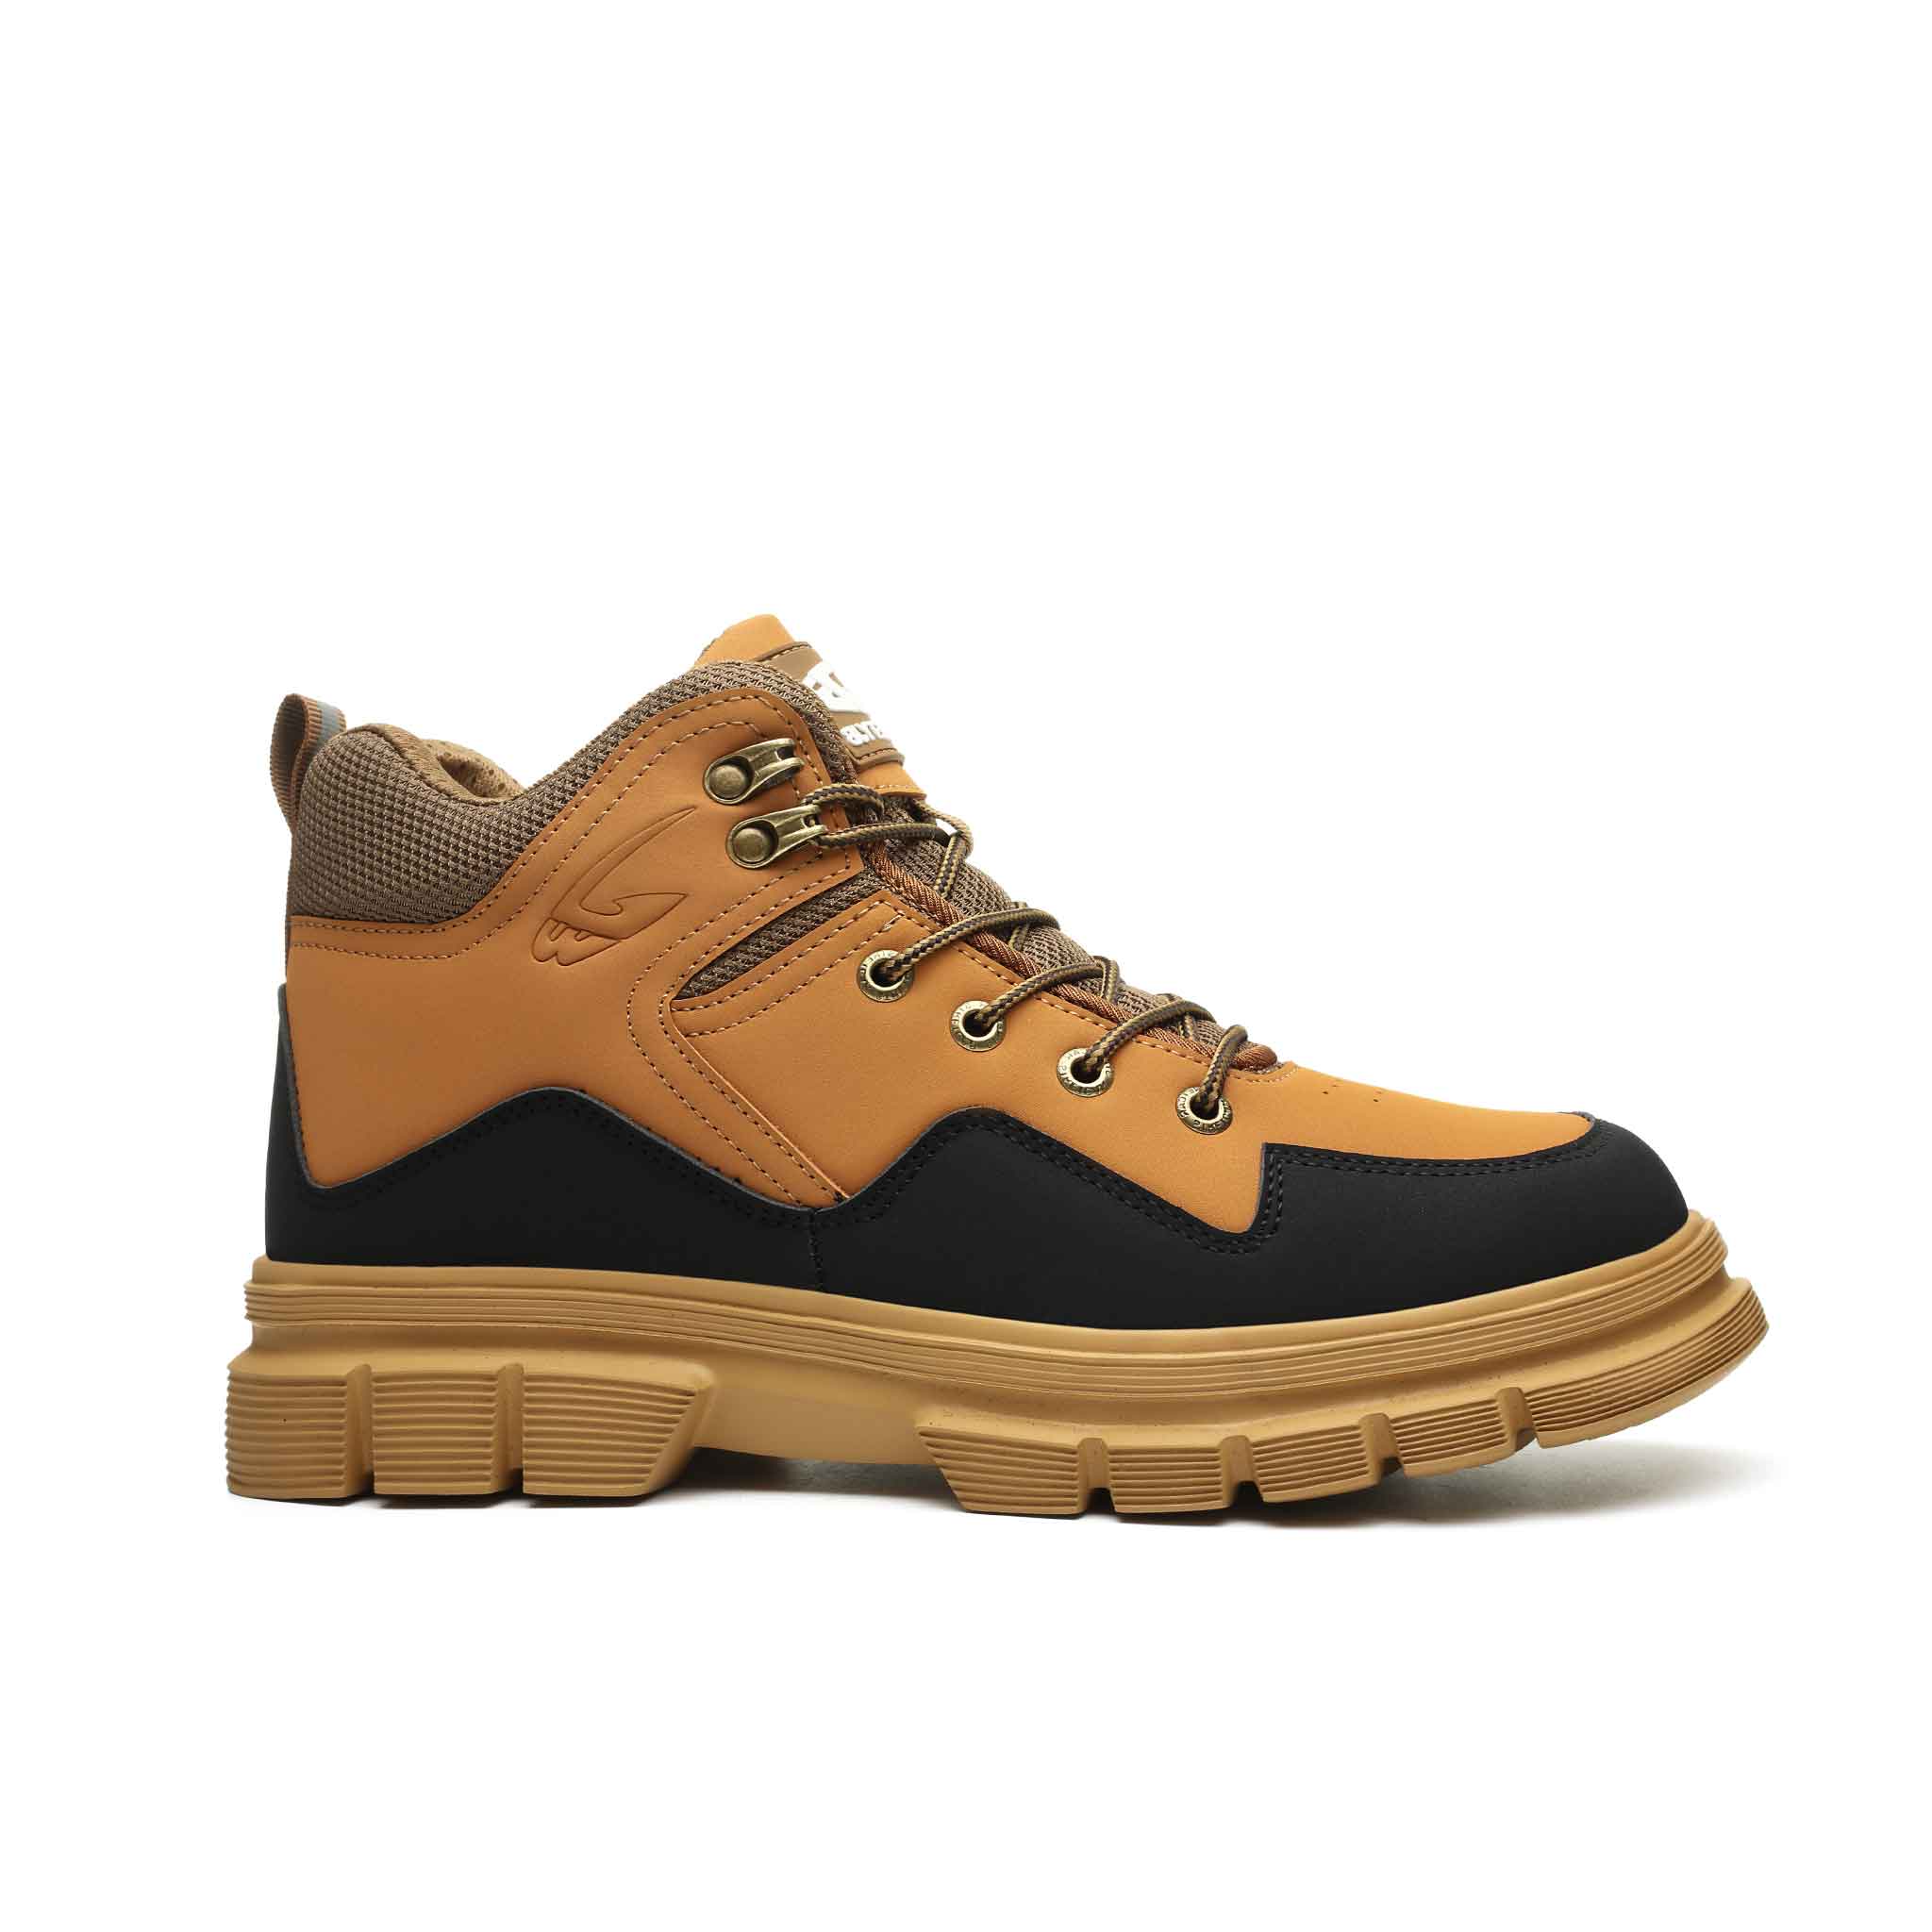 Women's Durable Steel Toe Work Boots - Spark Resistant | B302